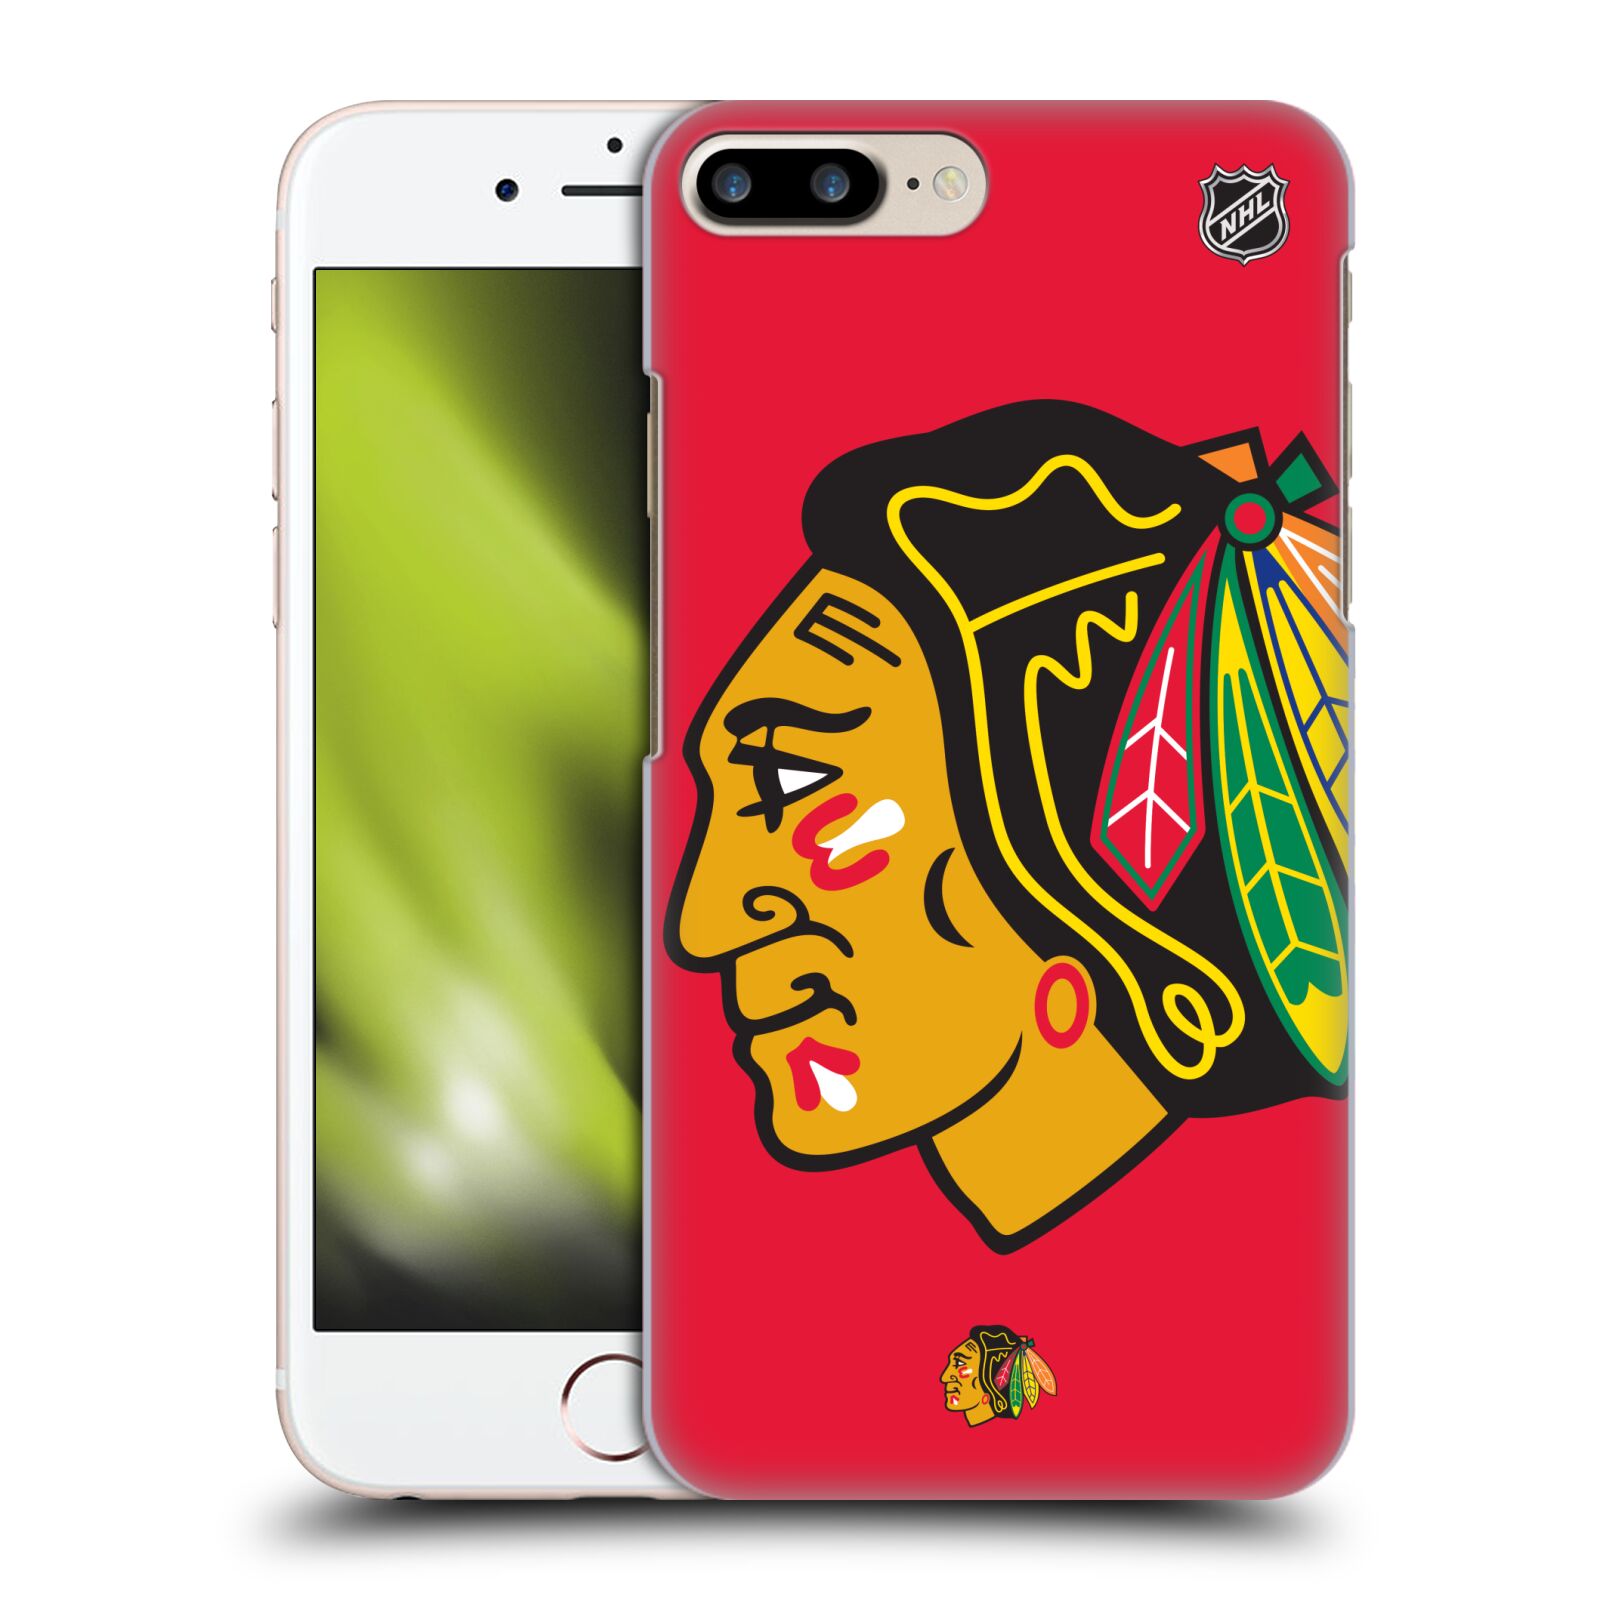 Pouzdro na mobil Apple Iphone 7/8 PLUS - HEAD CASE - Hokej NHL - Chicago Blackhawks - Velký znak